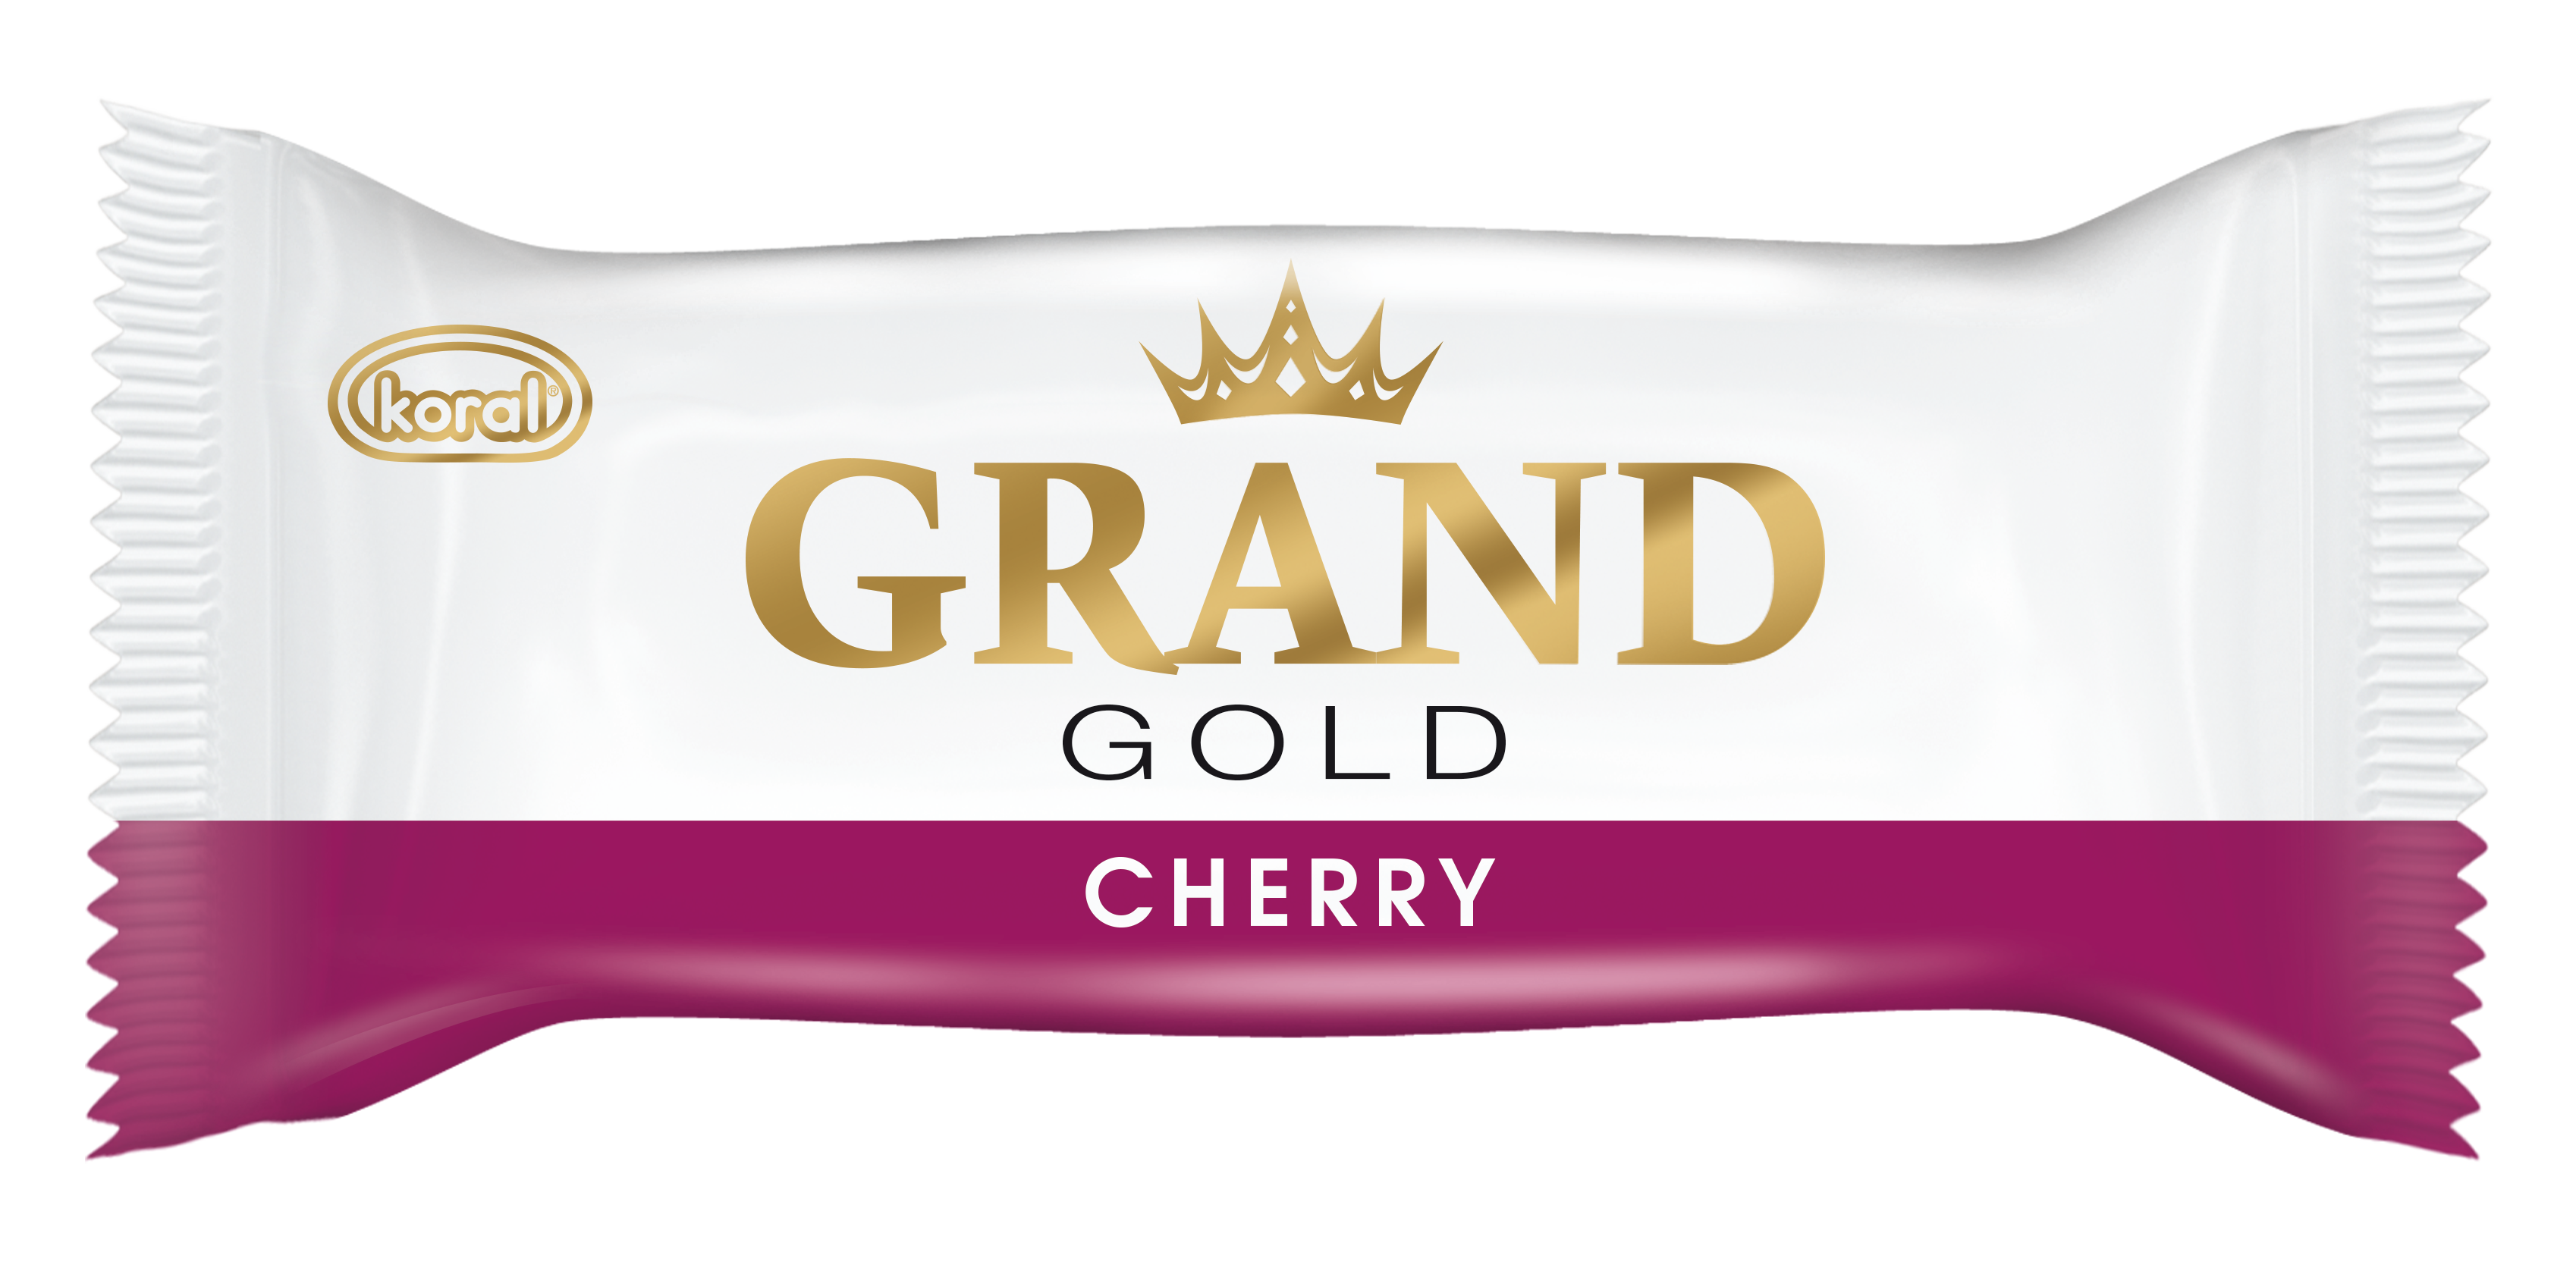 Grand Gold CHERRY